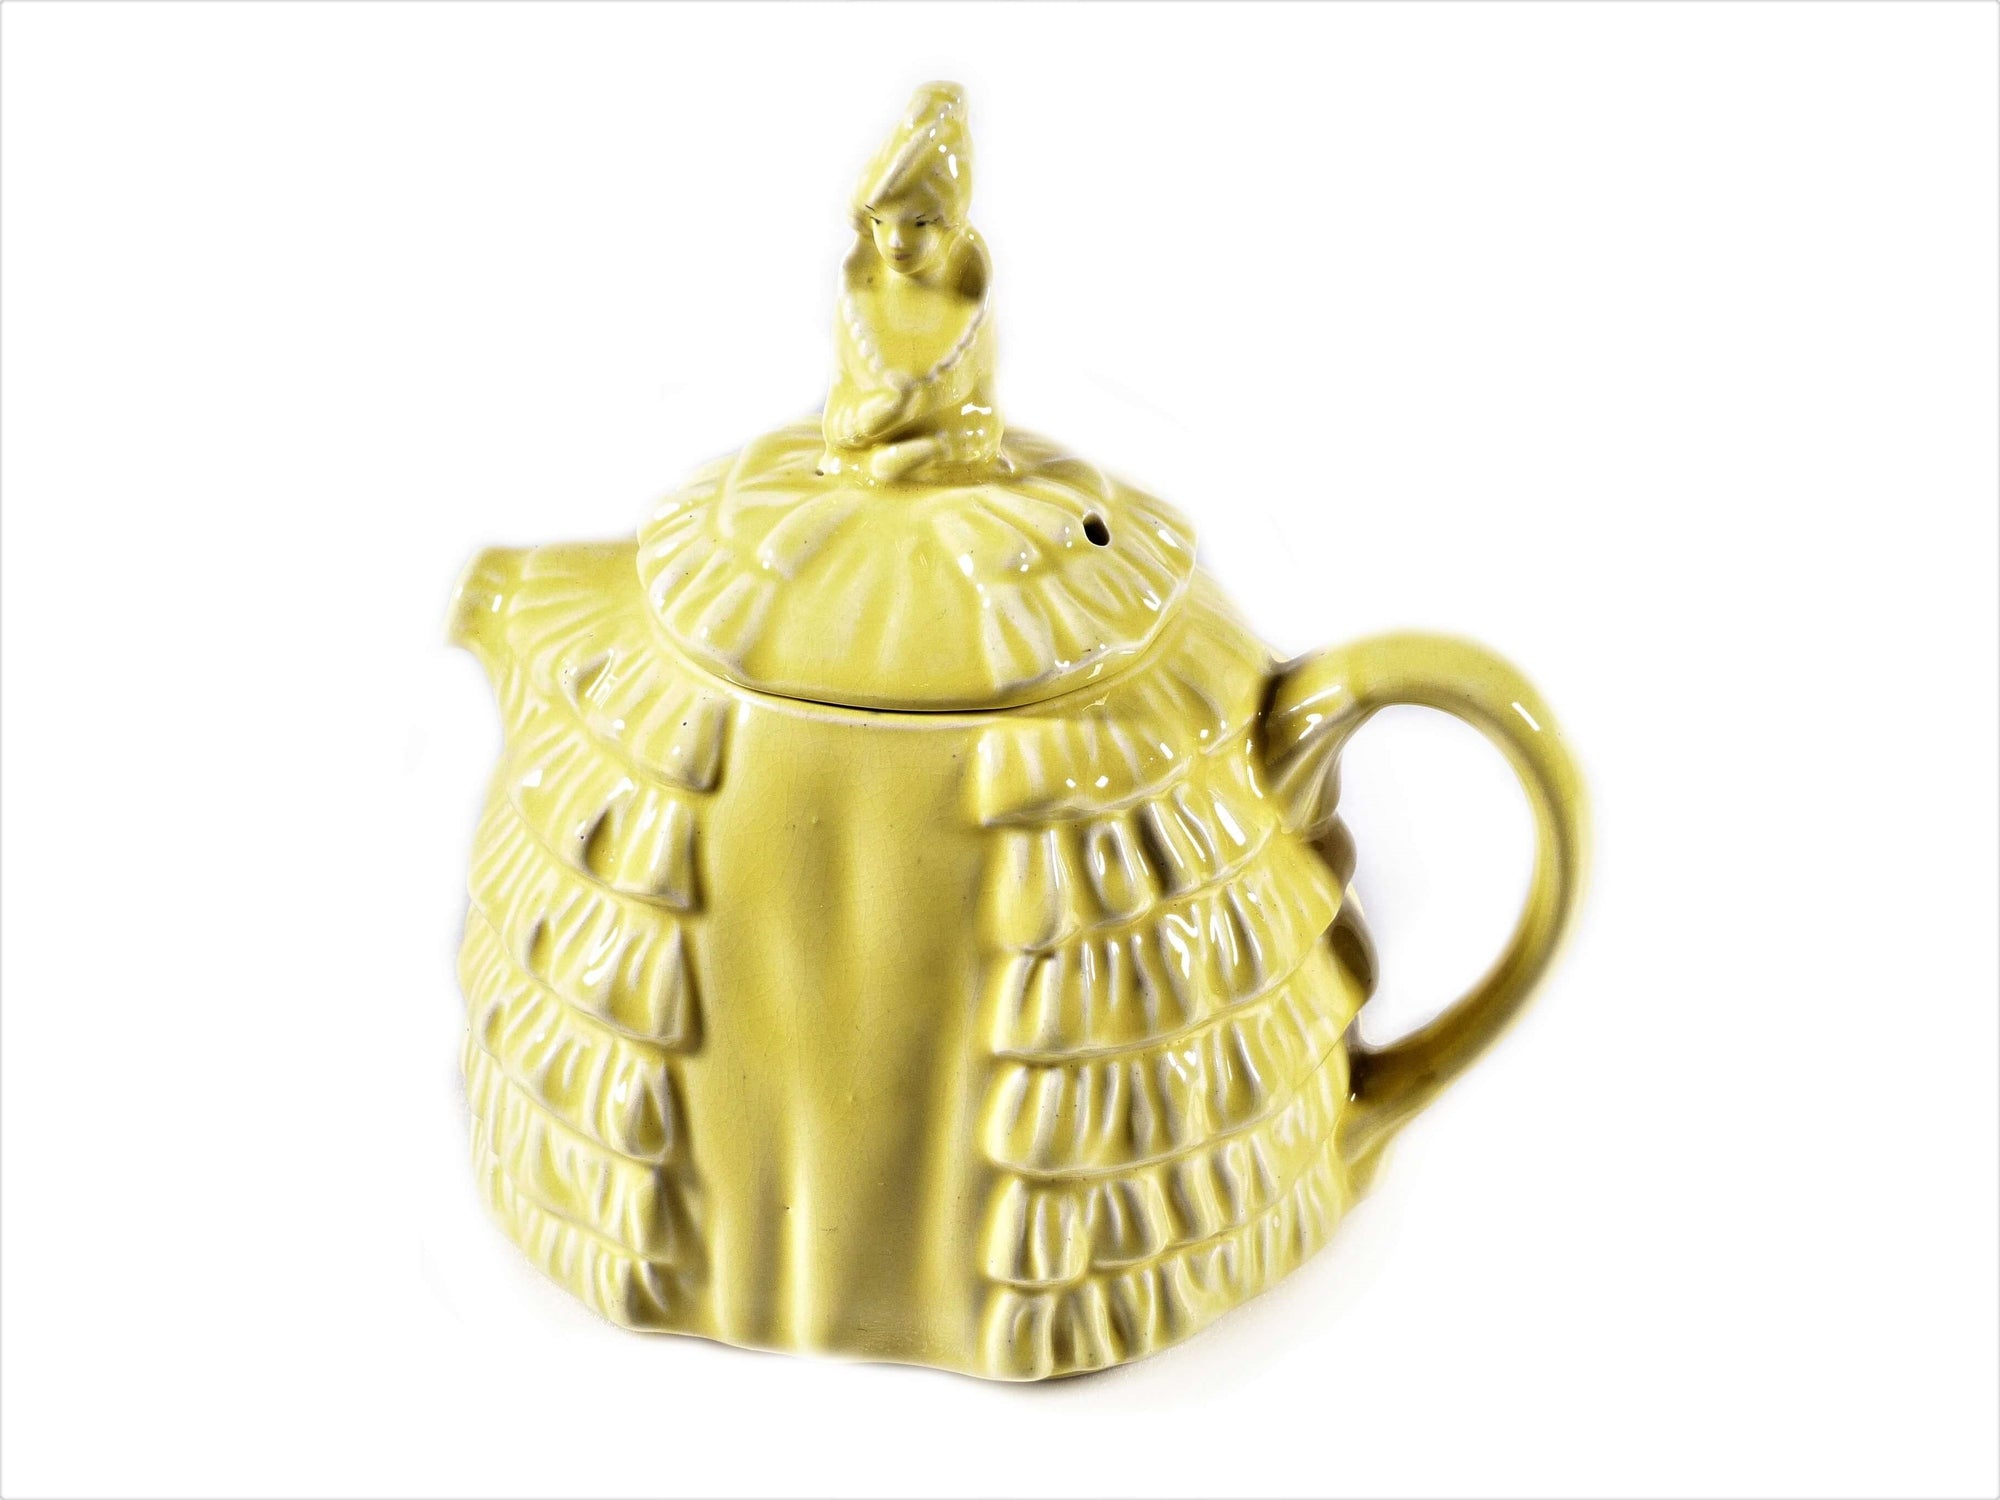 Sadler Teapot, Ye Daintee Ladyee, English China, Crinoline Lady Teapot